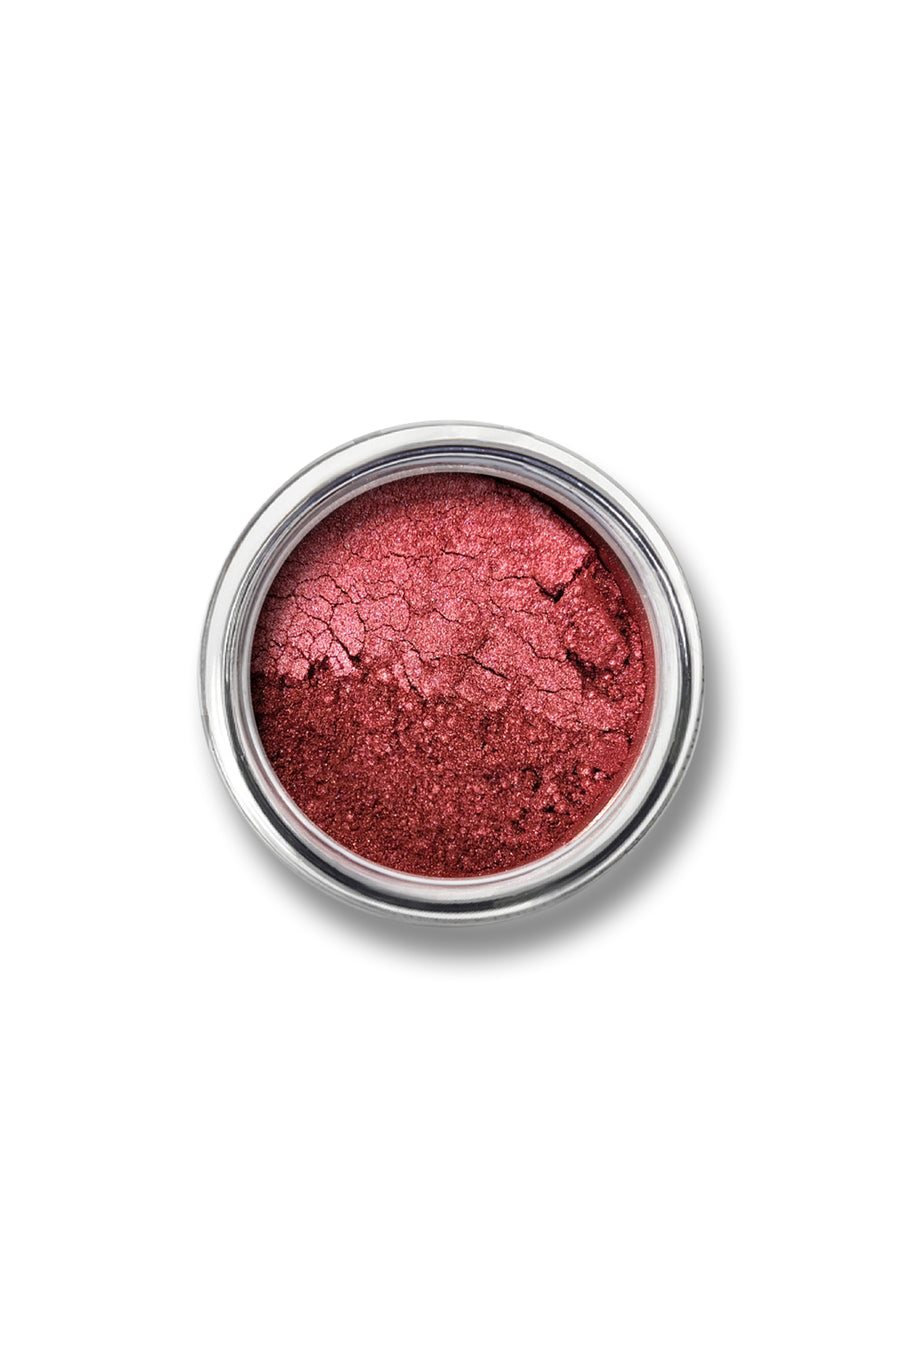 Shimmer Eyeshadow #12 - Bordeaux - Blend Mineral Cosmetics